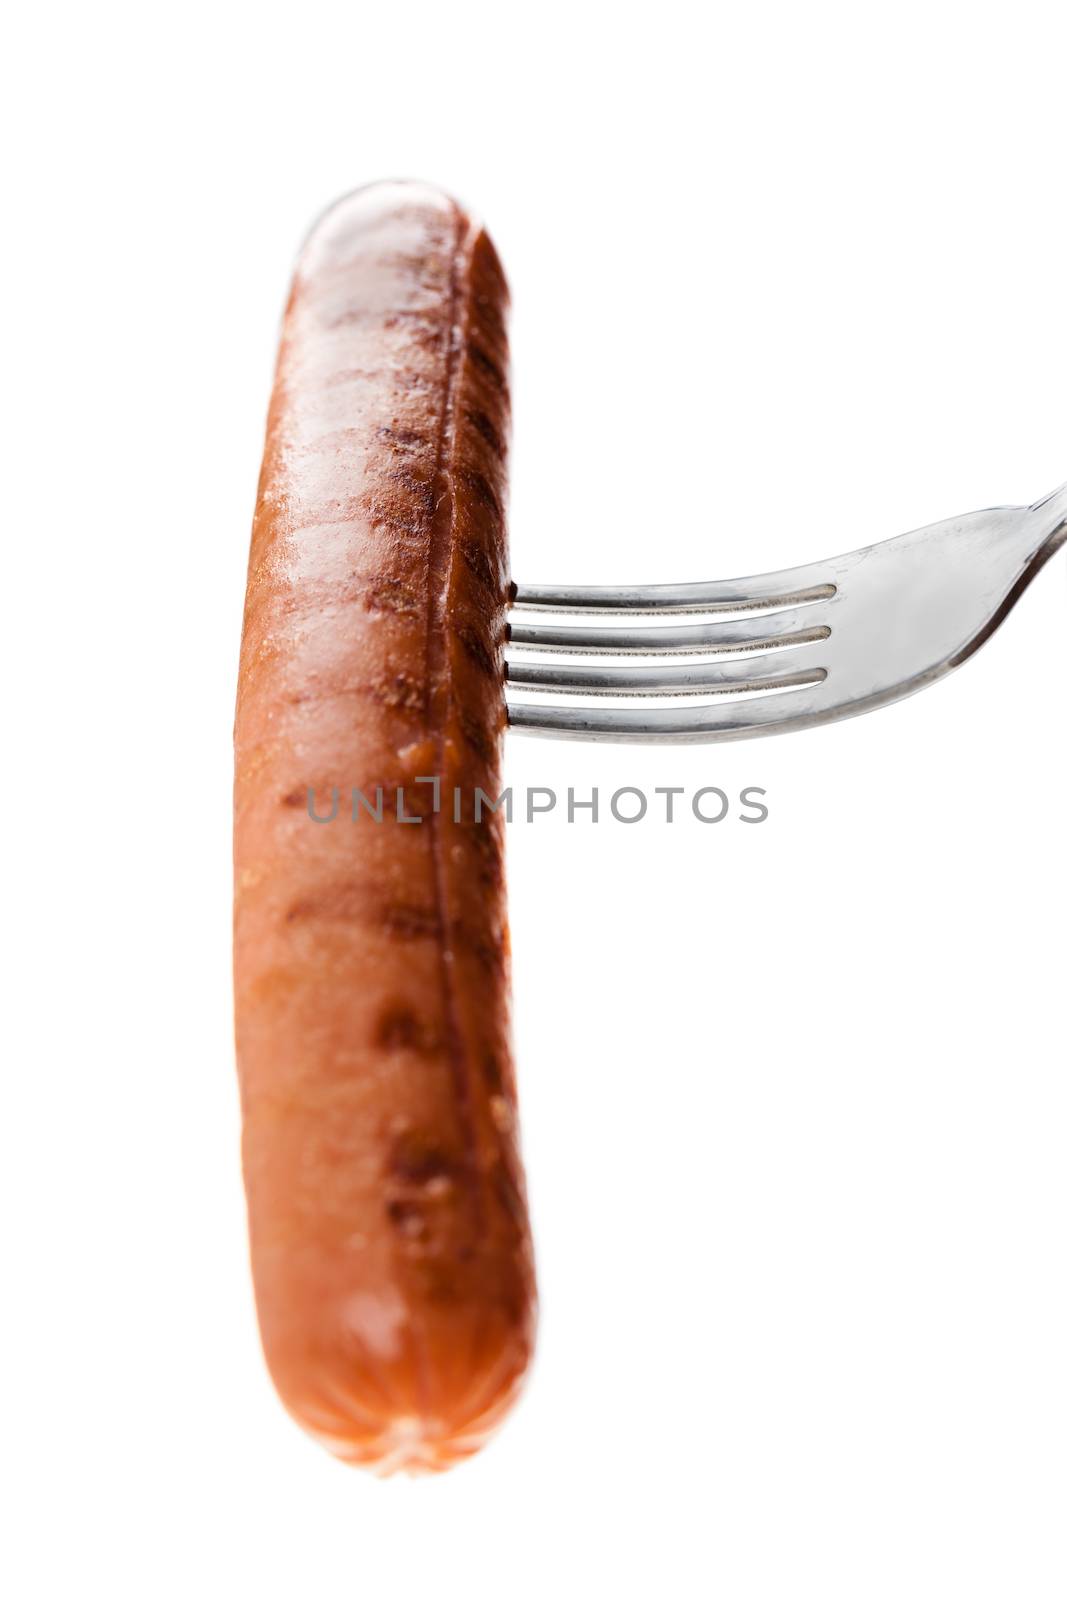 Sausage on white background by dario_lo_presti